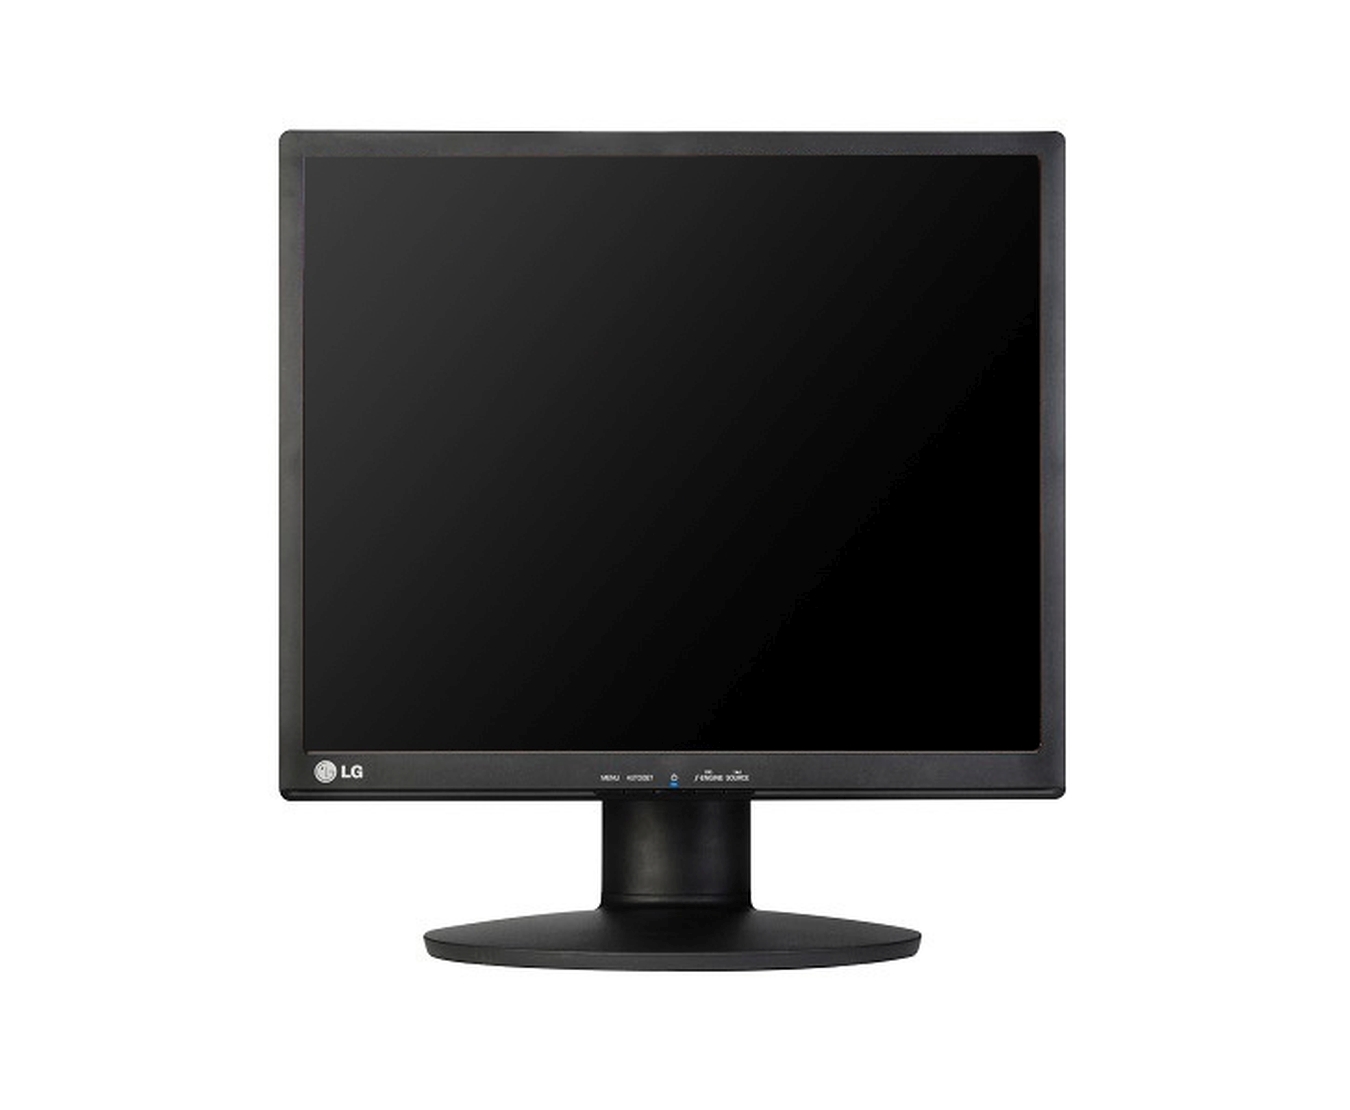 LG 17' 17MB15P LCD Monitor 4:3 1280x1024 5ms 5M:1 VGA DVI Pivot Height Adjust Tilt 3yrs